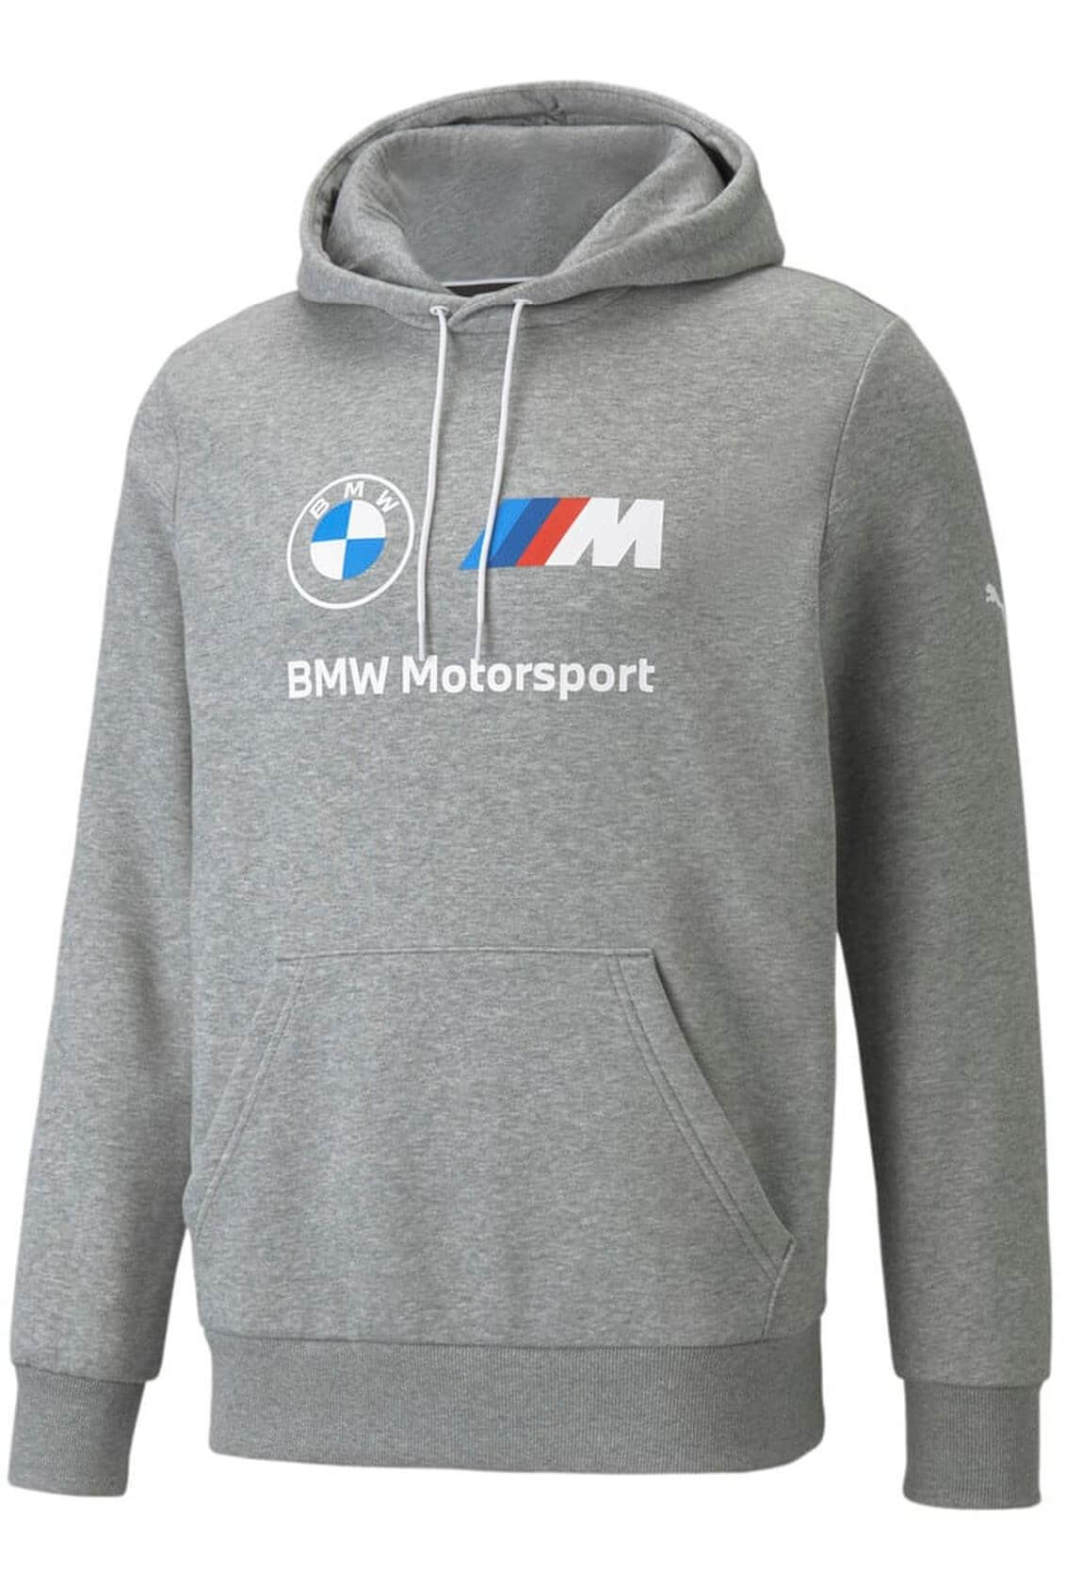 axe Moral Carelessness Hanorac PUMA BMW M Motorsport Essentials - 532250-03